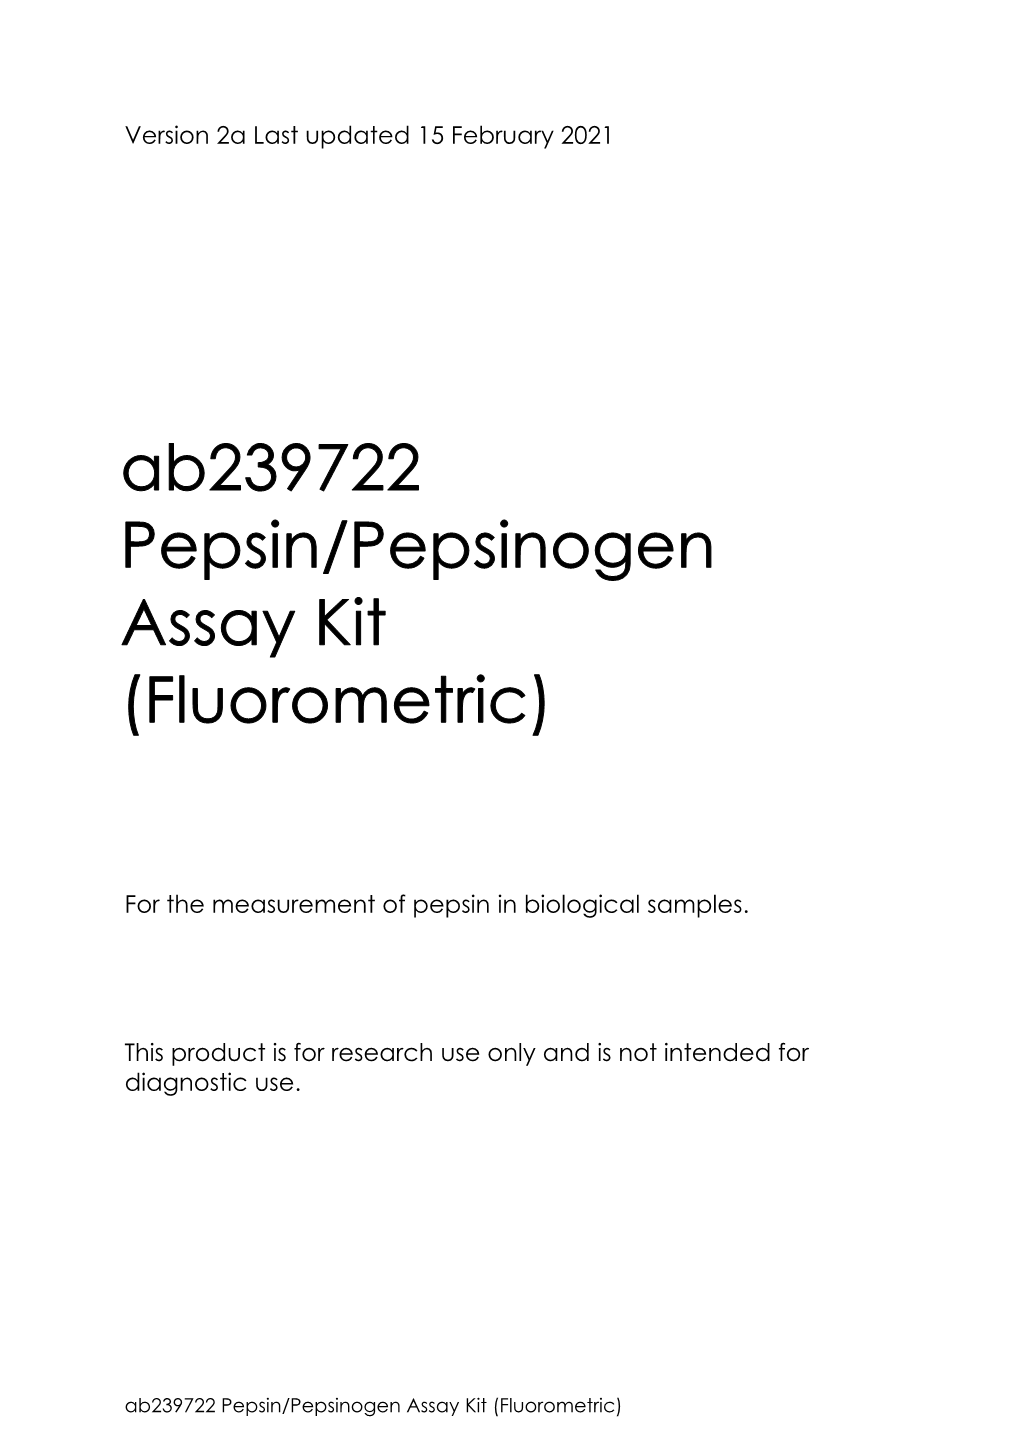 Ab239722 Pepsin/Pepsinogen Assay Kit (Fluorometric)